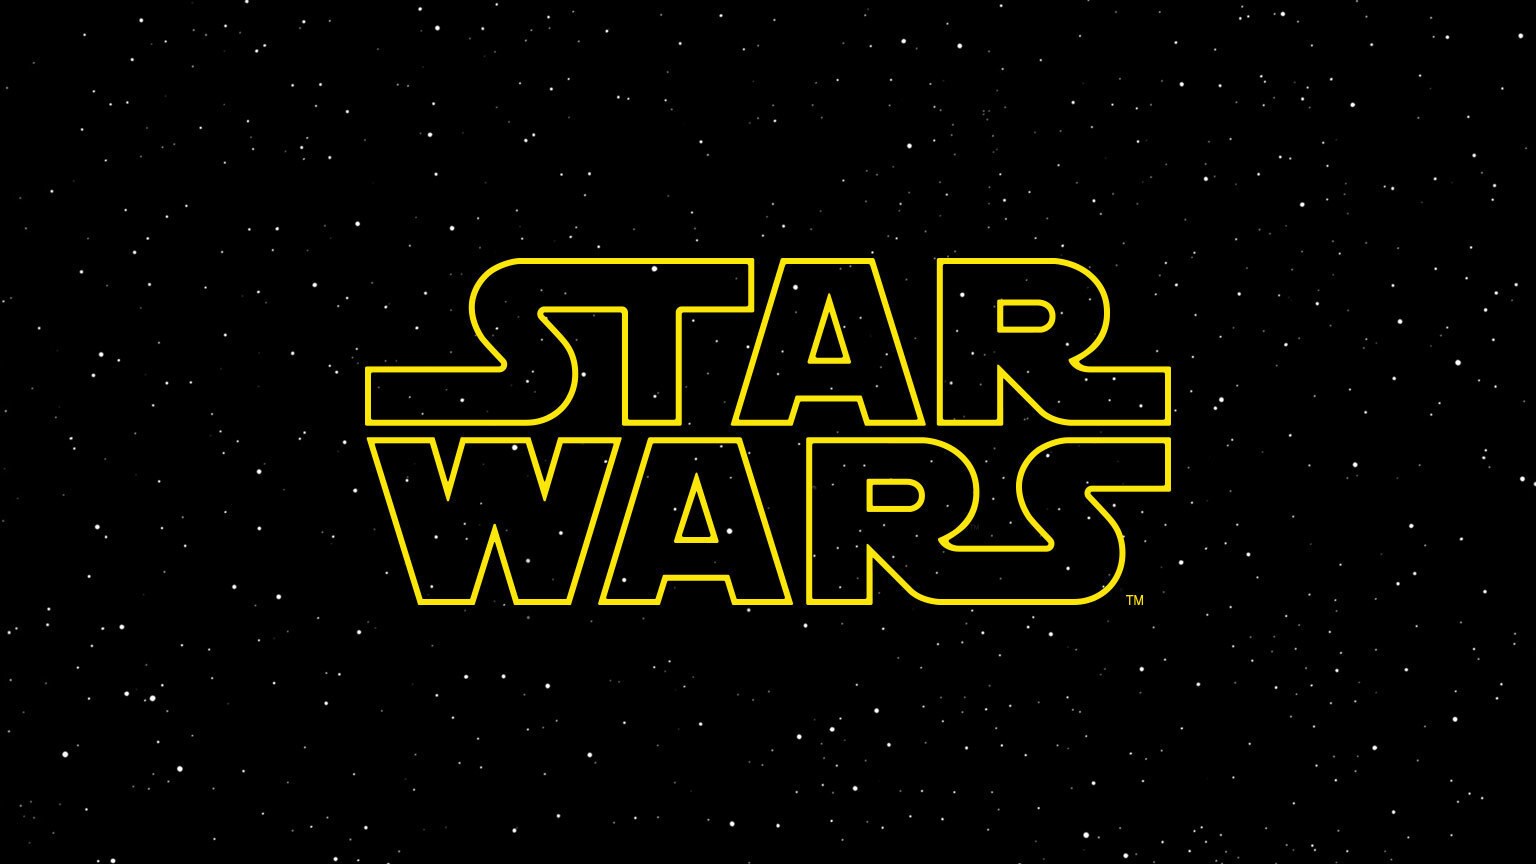 Jon Favreau to Executive Produce and Write Live-Action Star Wars Series